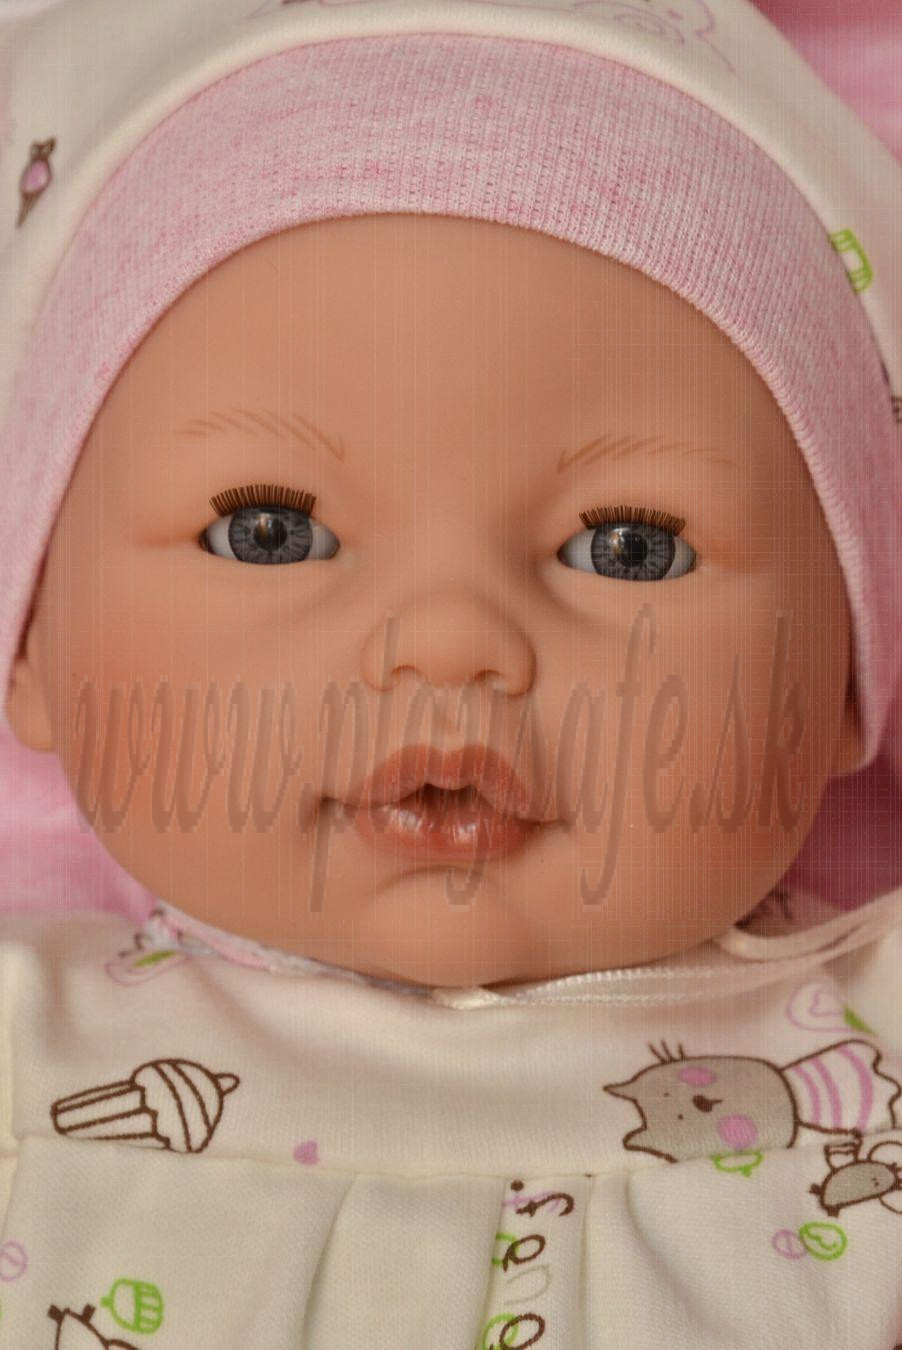 Antonio Juan Bimba Saquito Bebes Rosa Baby Doll, 37cm closing eyes